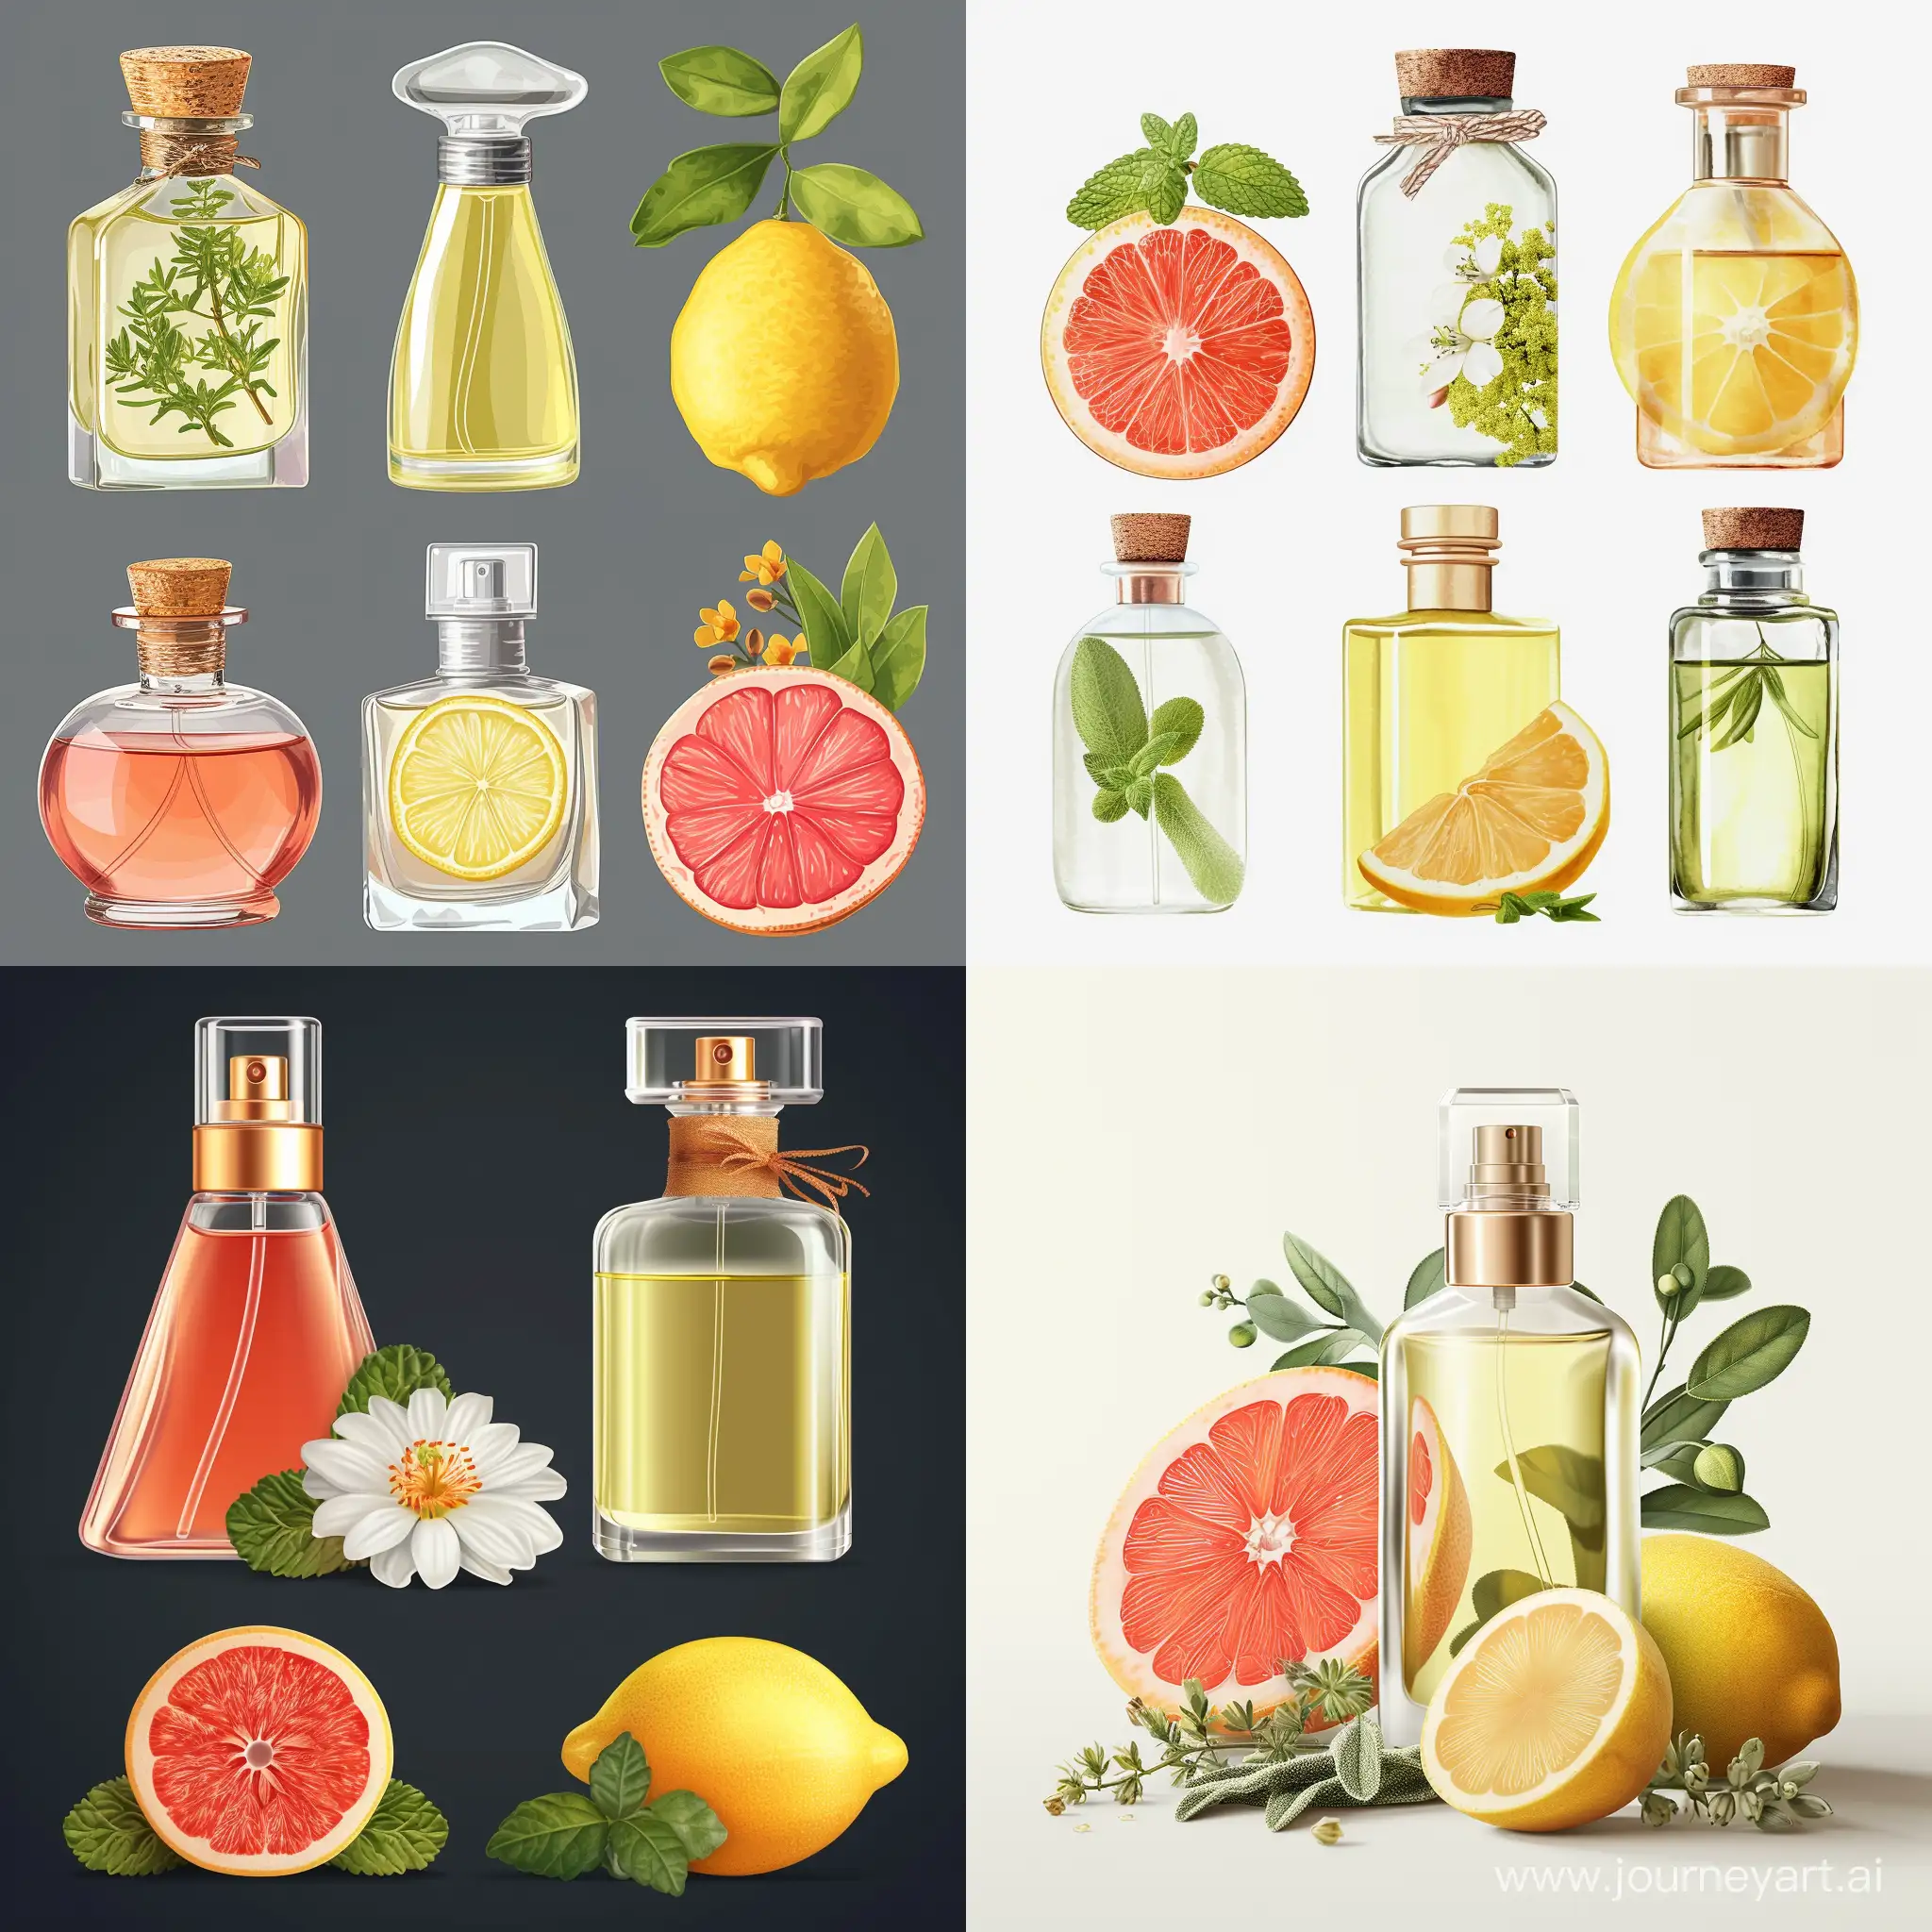 perfumes, Clary Sage, Lemon, Grapefruit, Neroli,
Orris фотореалістично, детально